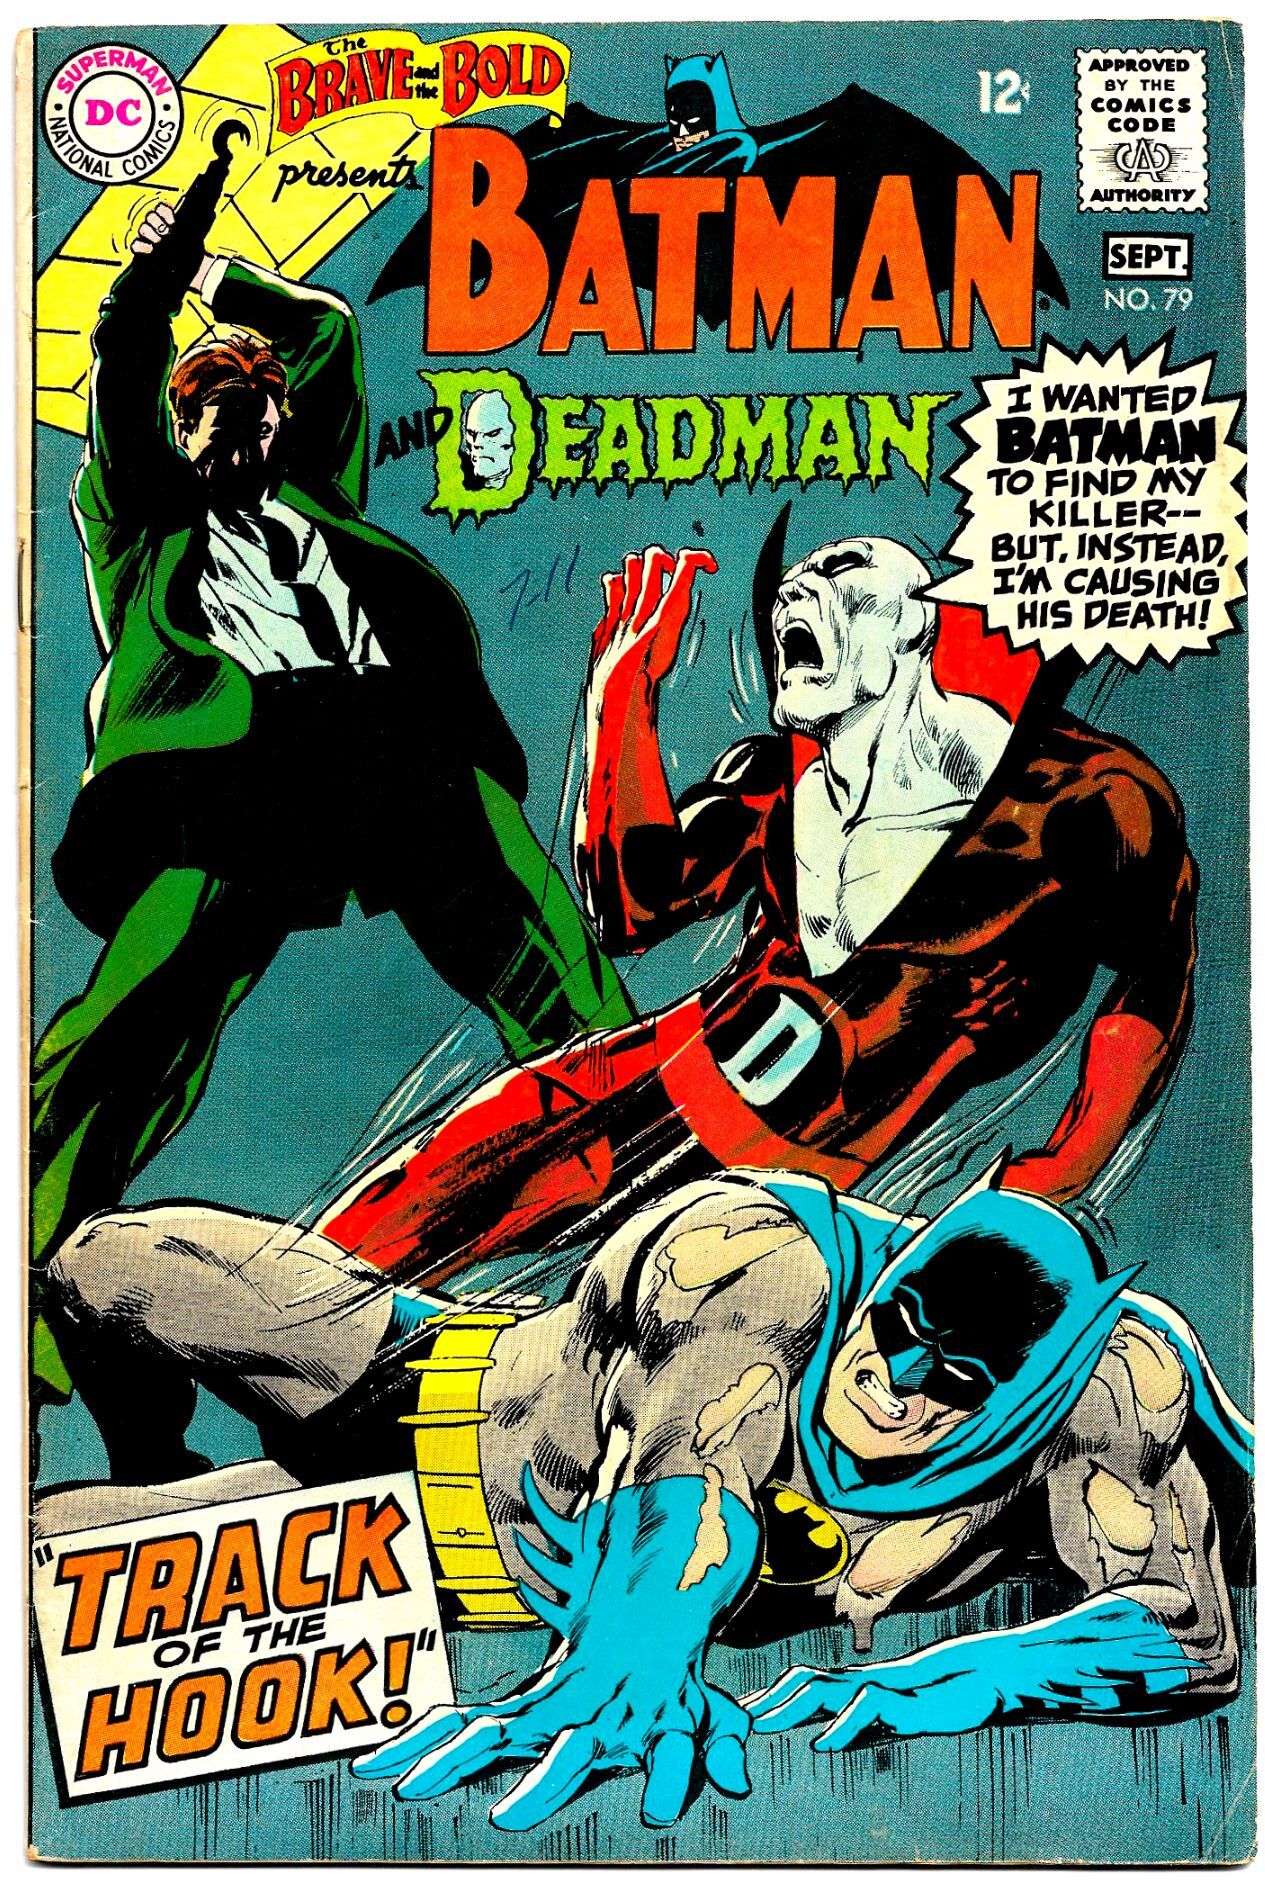 BRAVE AND THE BOLD #79 (Aug1968) 6.5 FN+ NEAL ADAMS on Batman & Deadman!